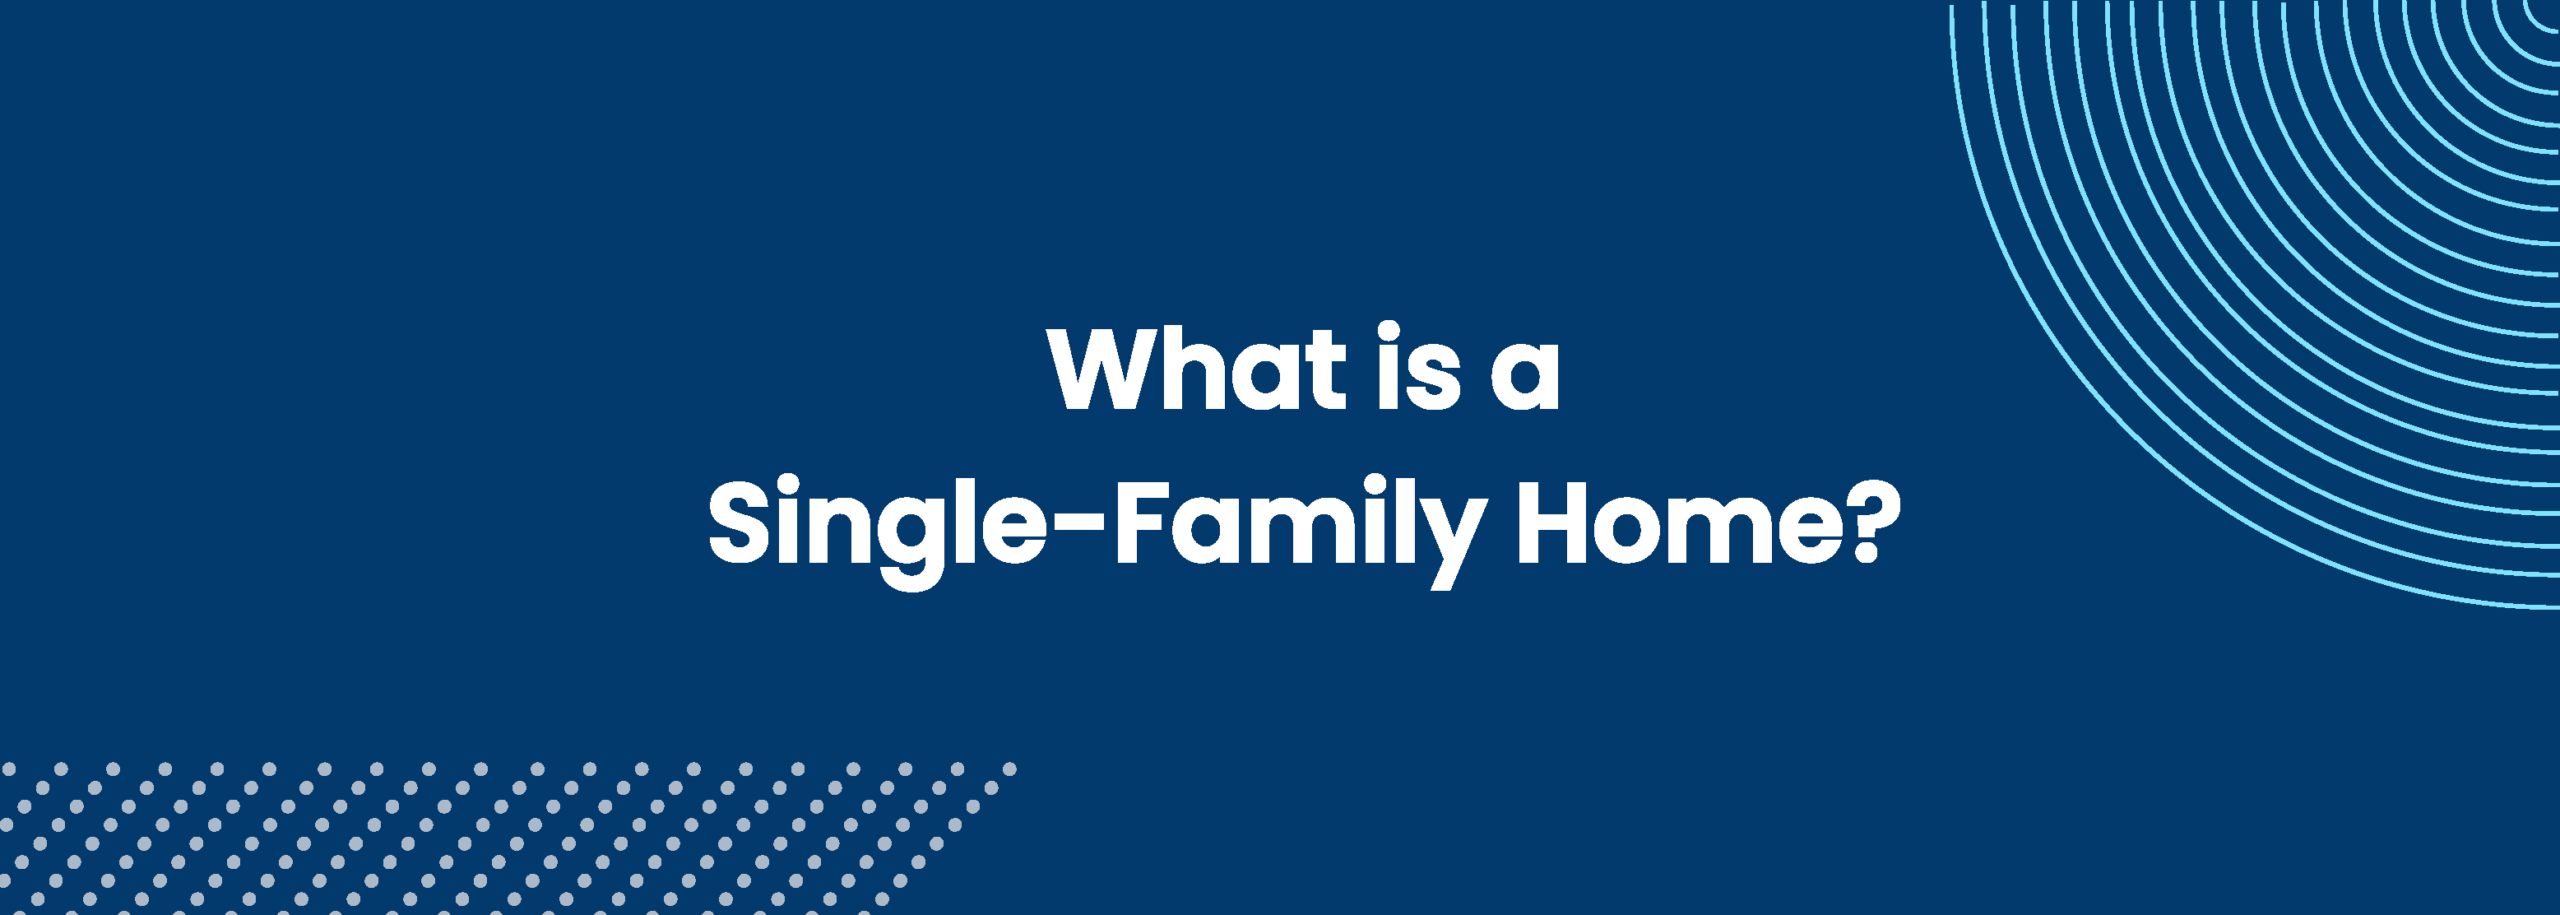 Single-Family Home